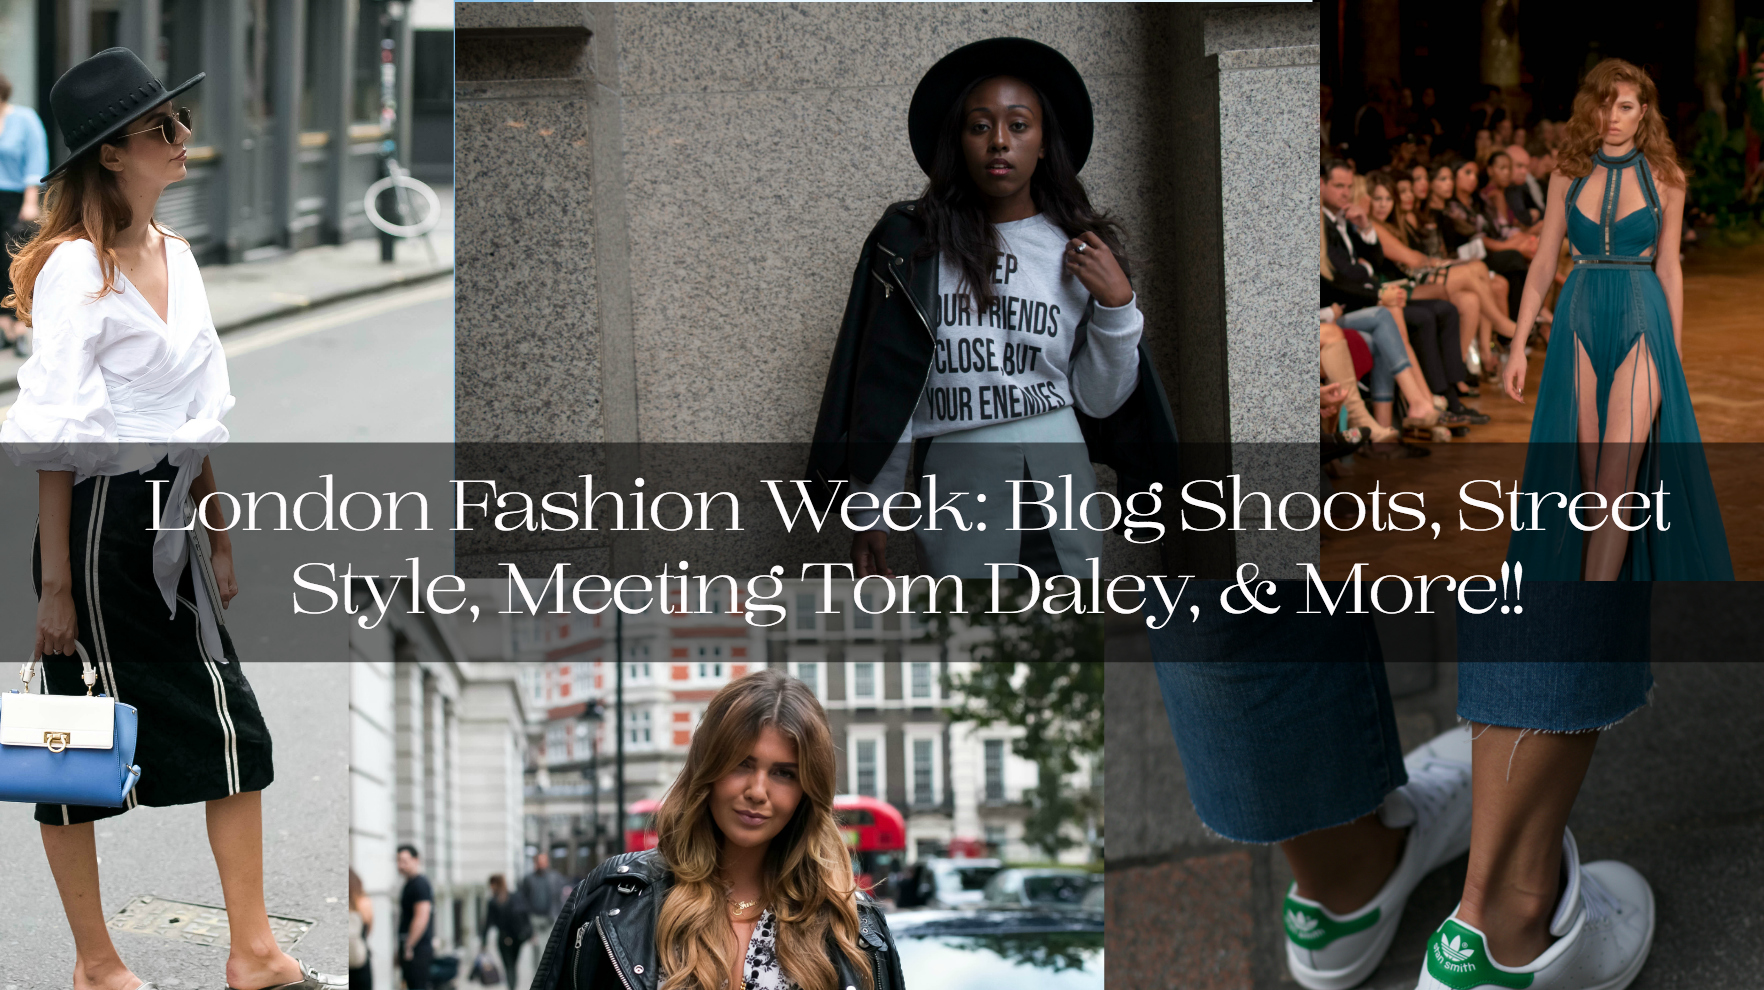 The Hat Logic - London Fashion Week: Blog Shoots, Street Style, Meeting Tom Daley, & More!!